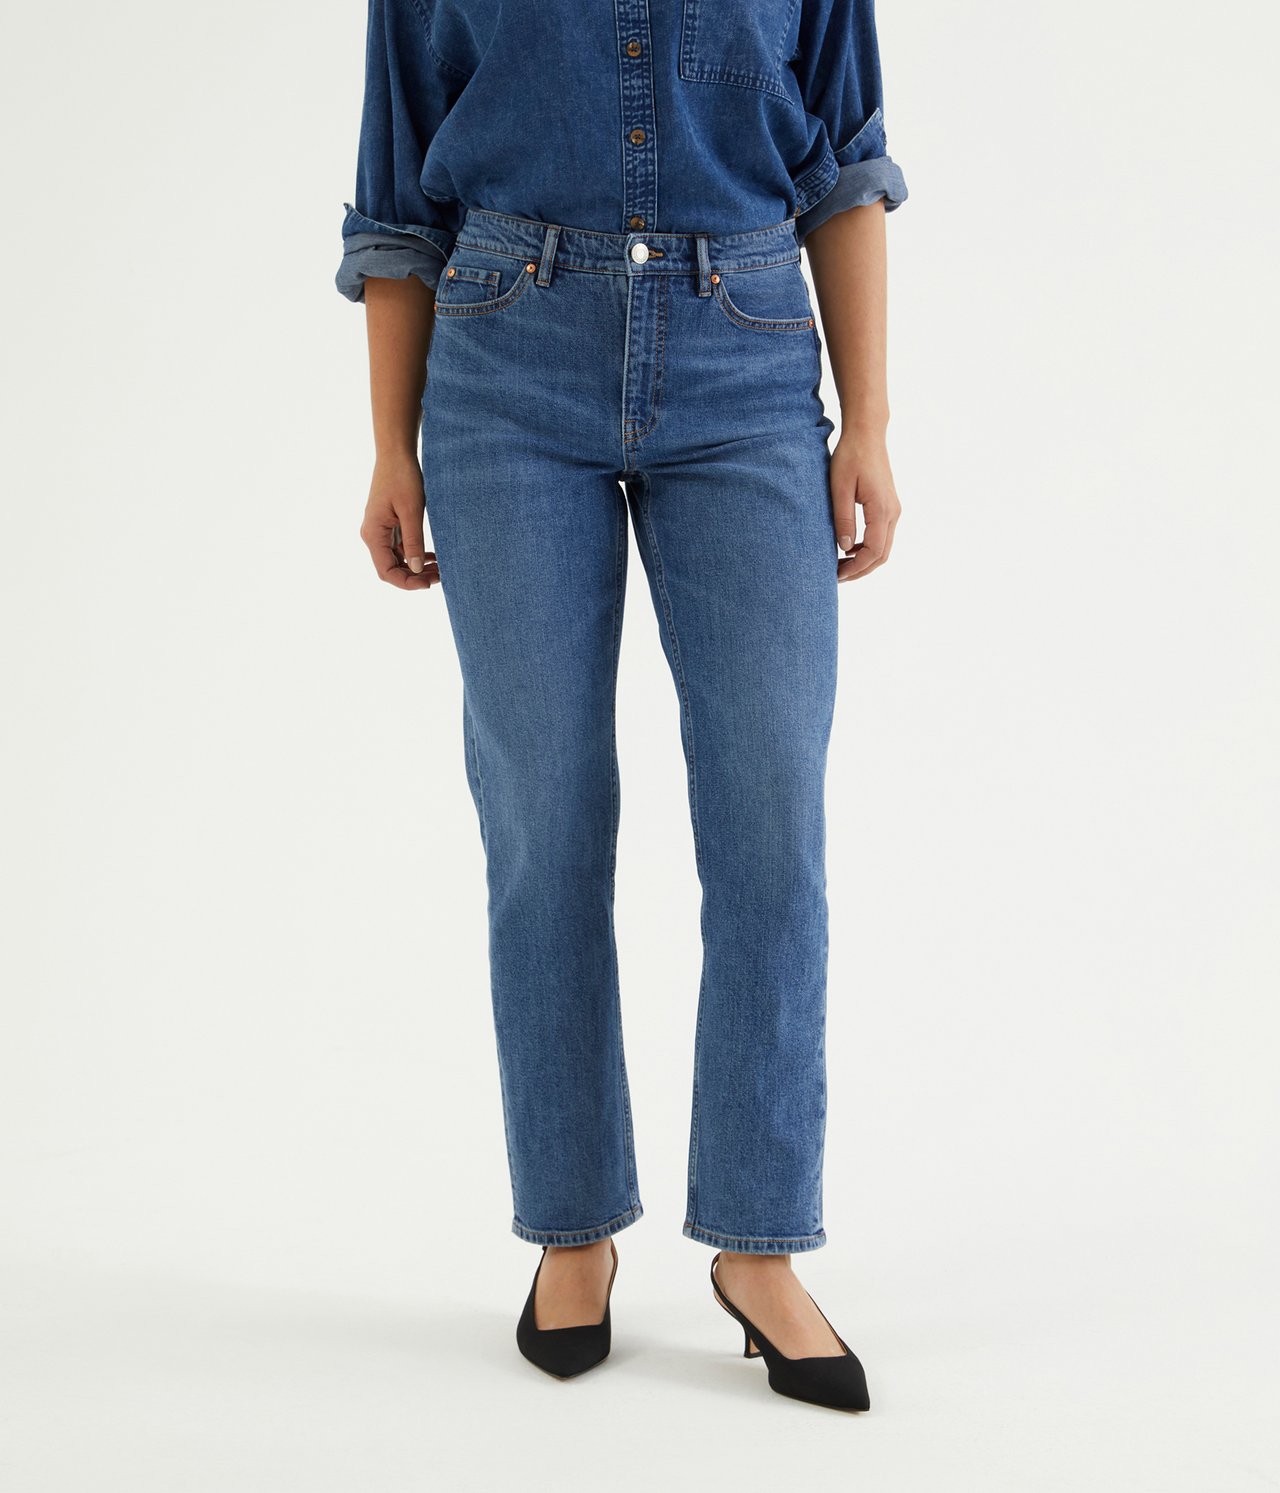 Jeans high waist tapered - Denim - 2